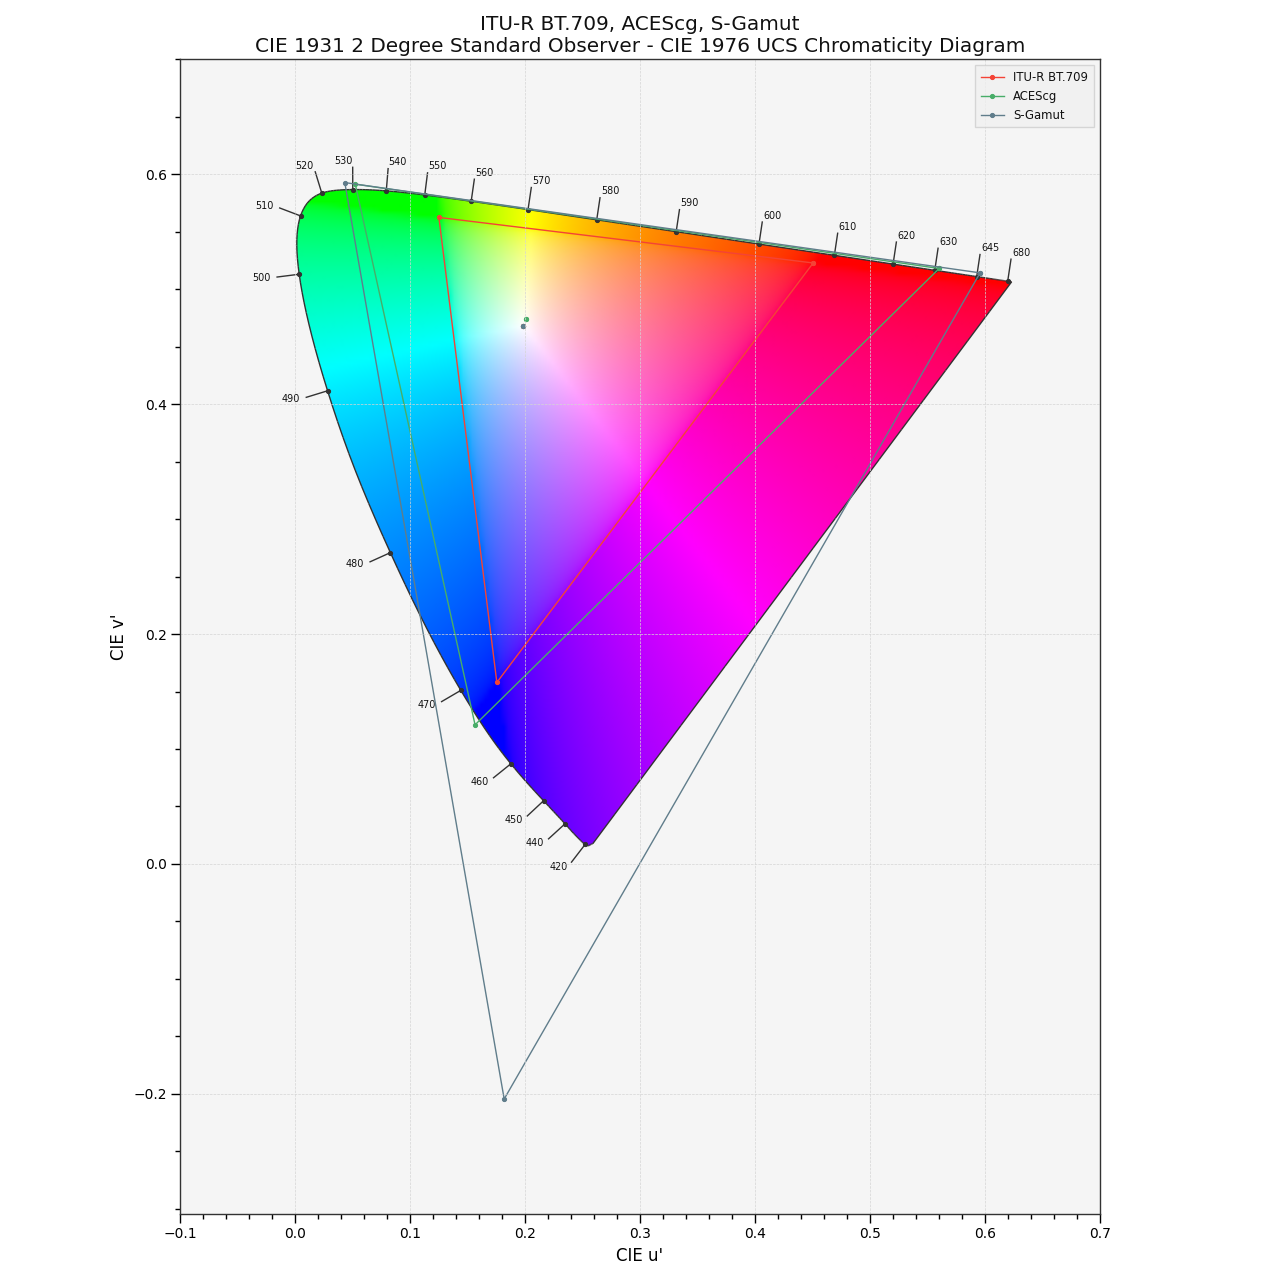 plot_RGB_colourspaces_in_chromaticity_diagram_CIE1976UCS